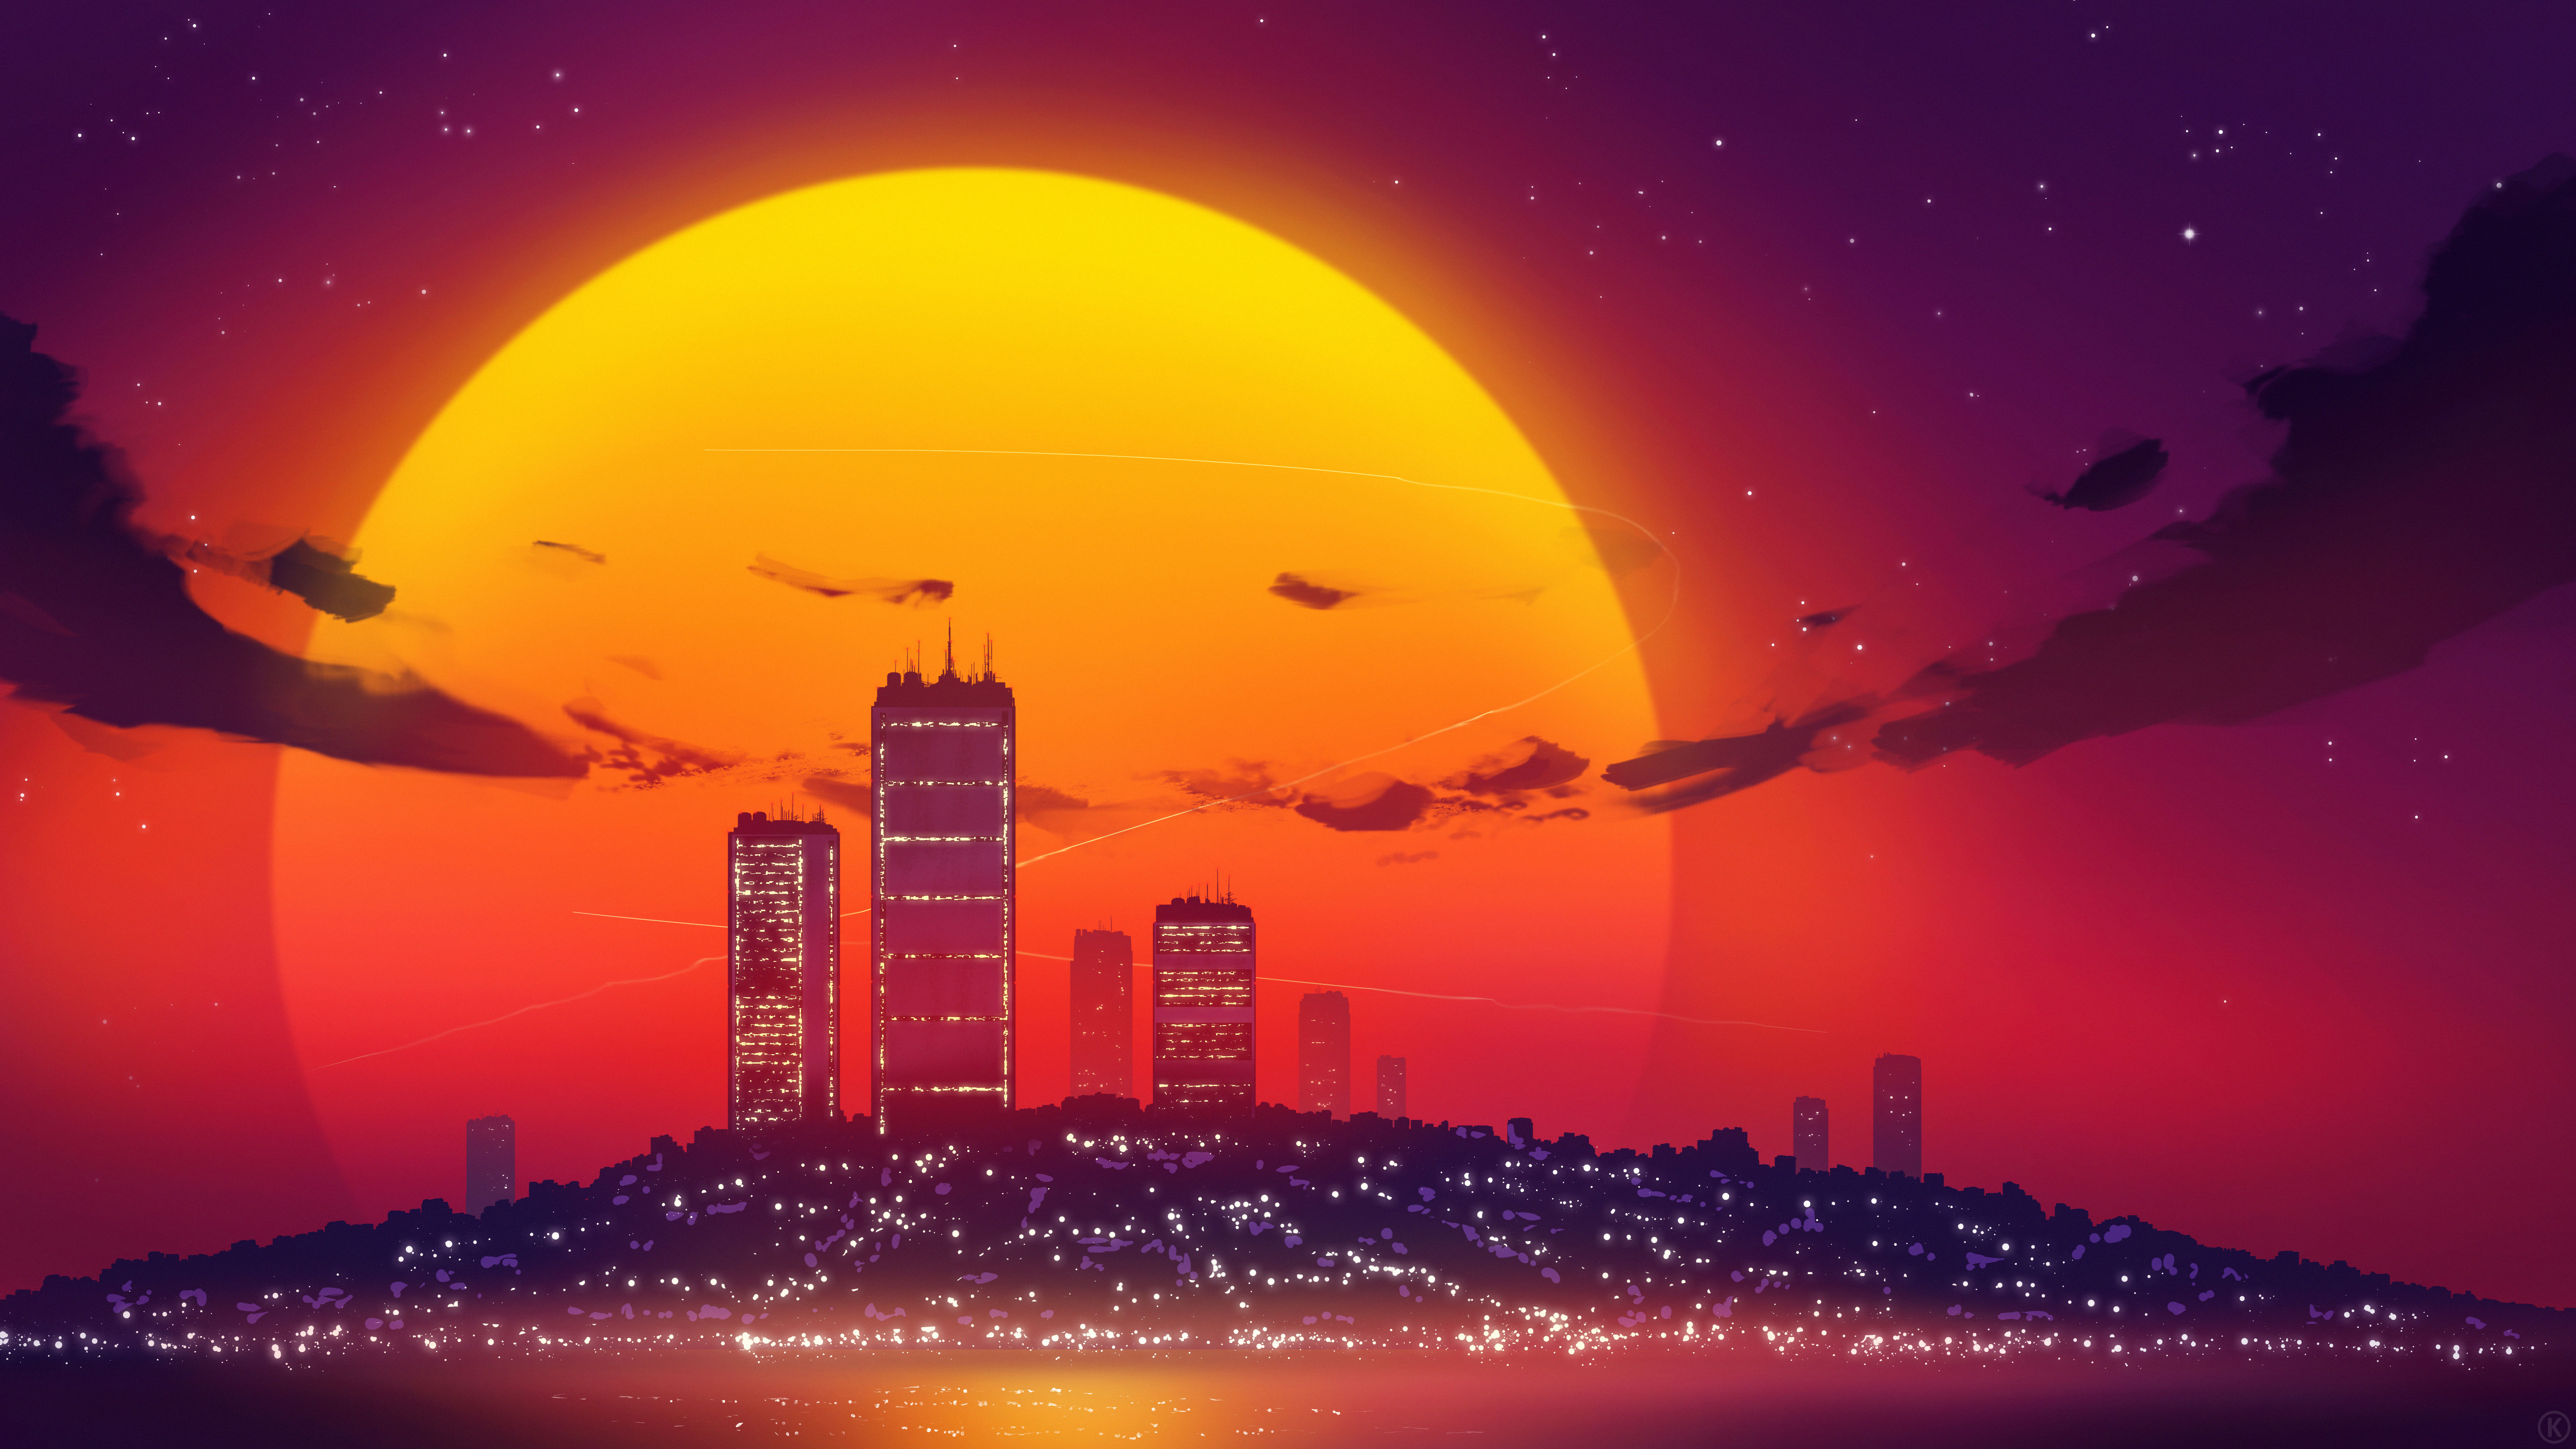 General 7680x4320 Kvacm digital art artwork illustration cityscape landscape sunset Retro Wave synthwave Sun city skyscraper city lights vaporwave stars clouds